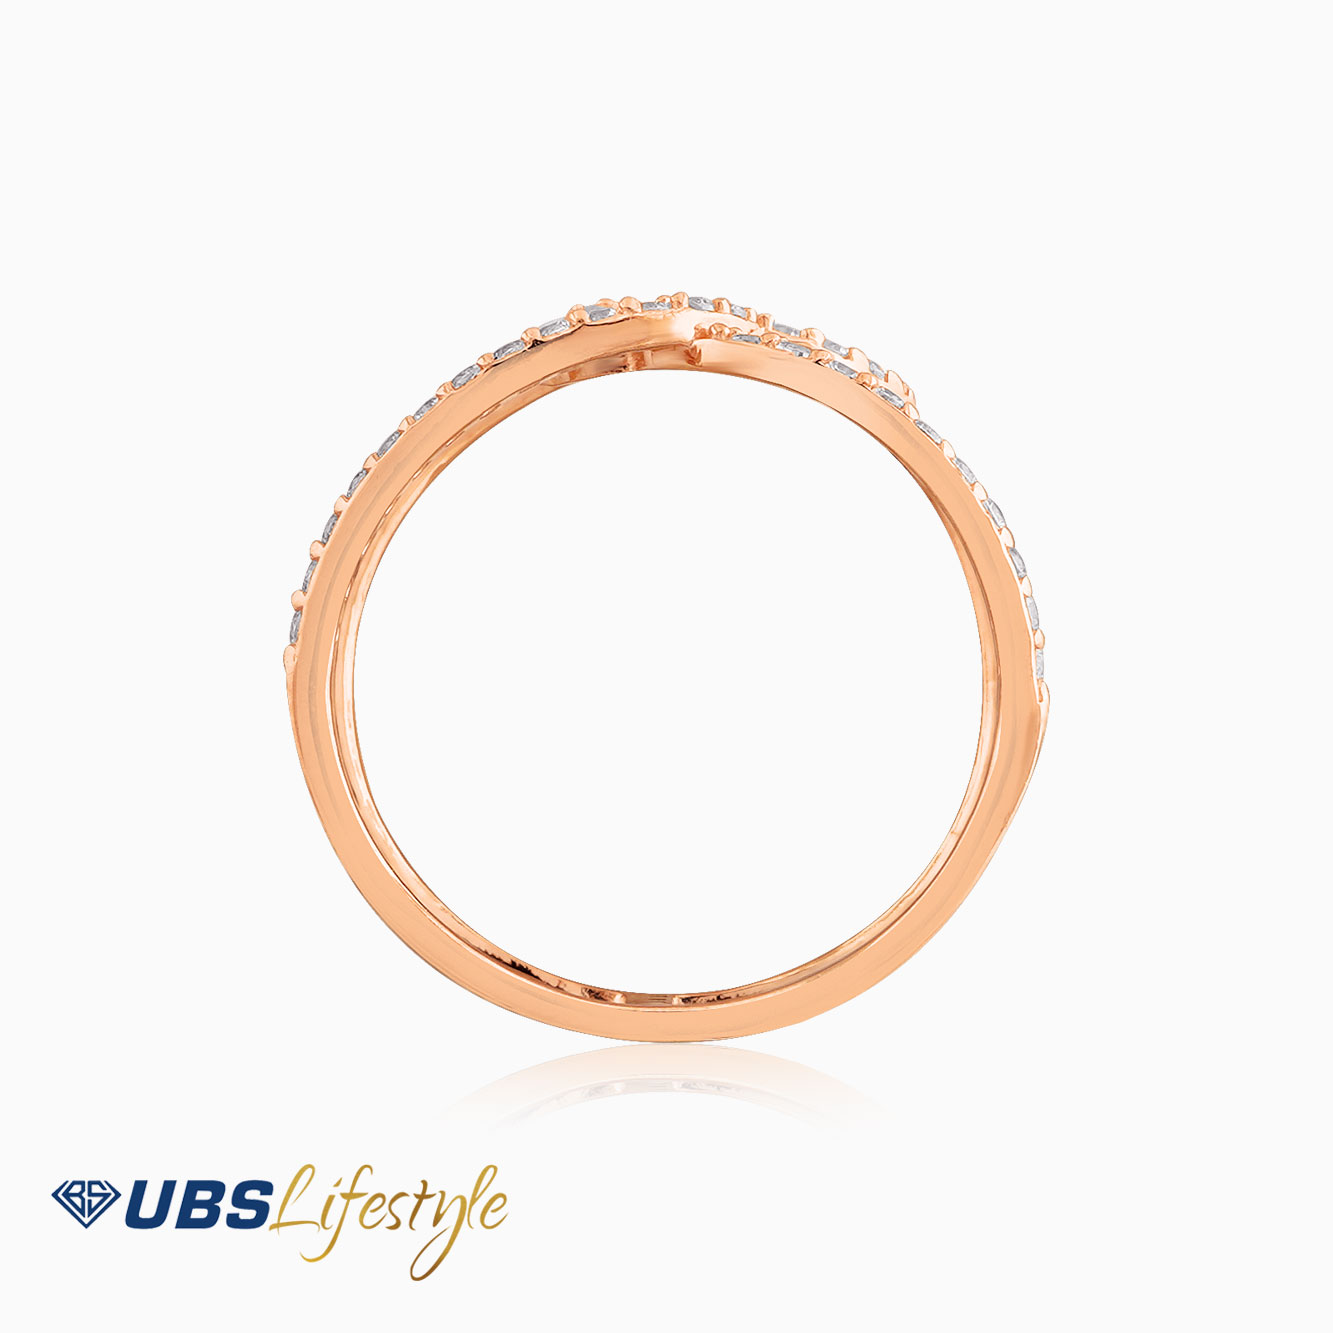 UBS Cincin Emas - Cc15918 - 17K